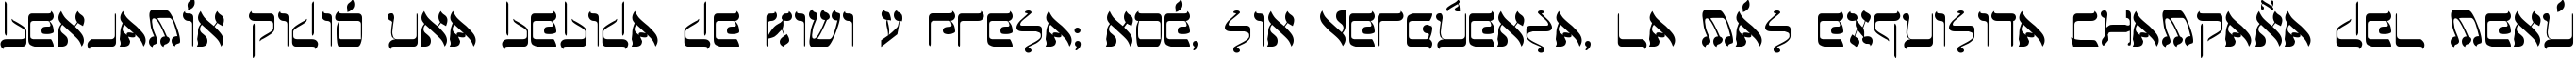 Пример написания шрифтом Jerusalem текста на испанском